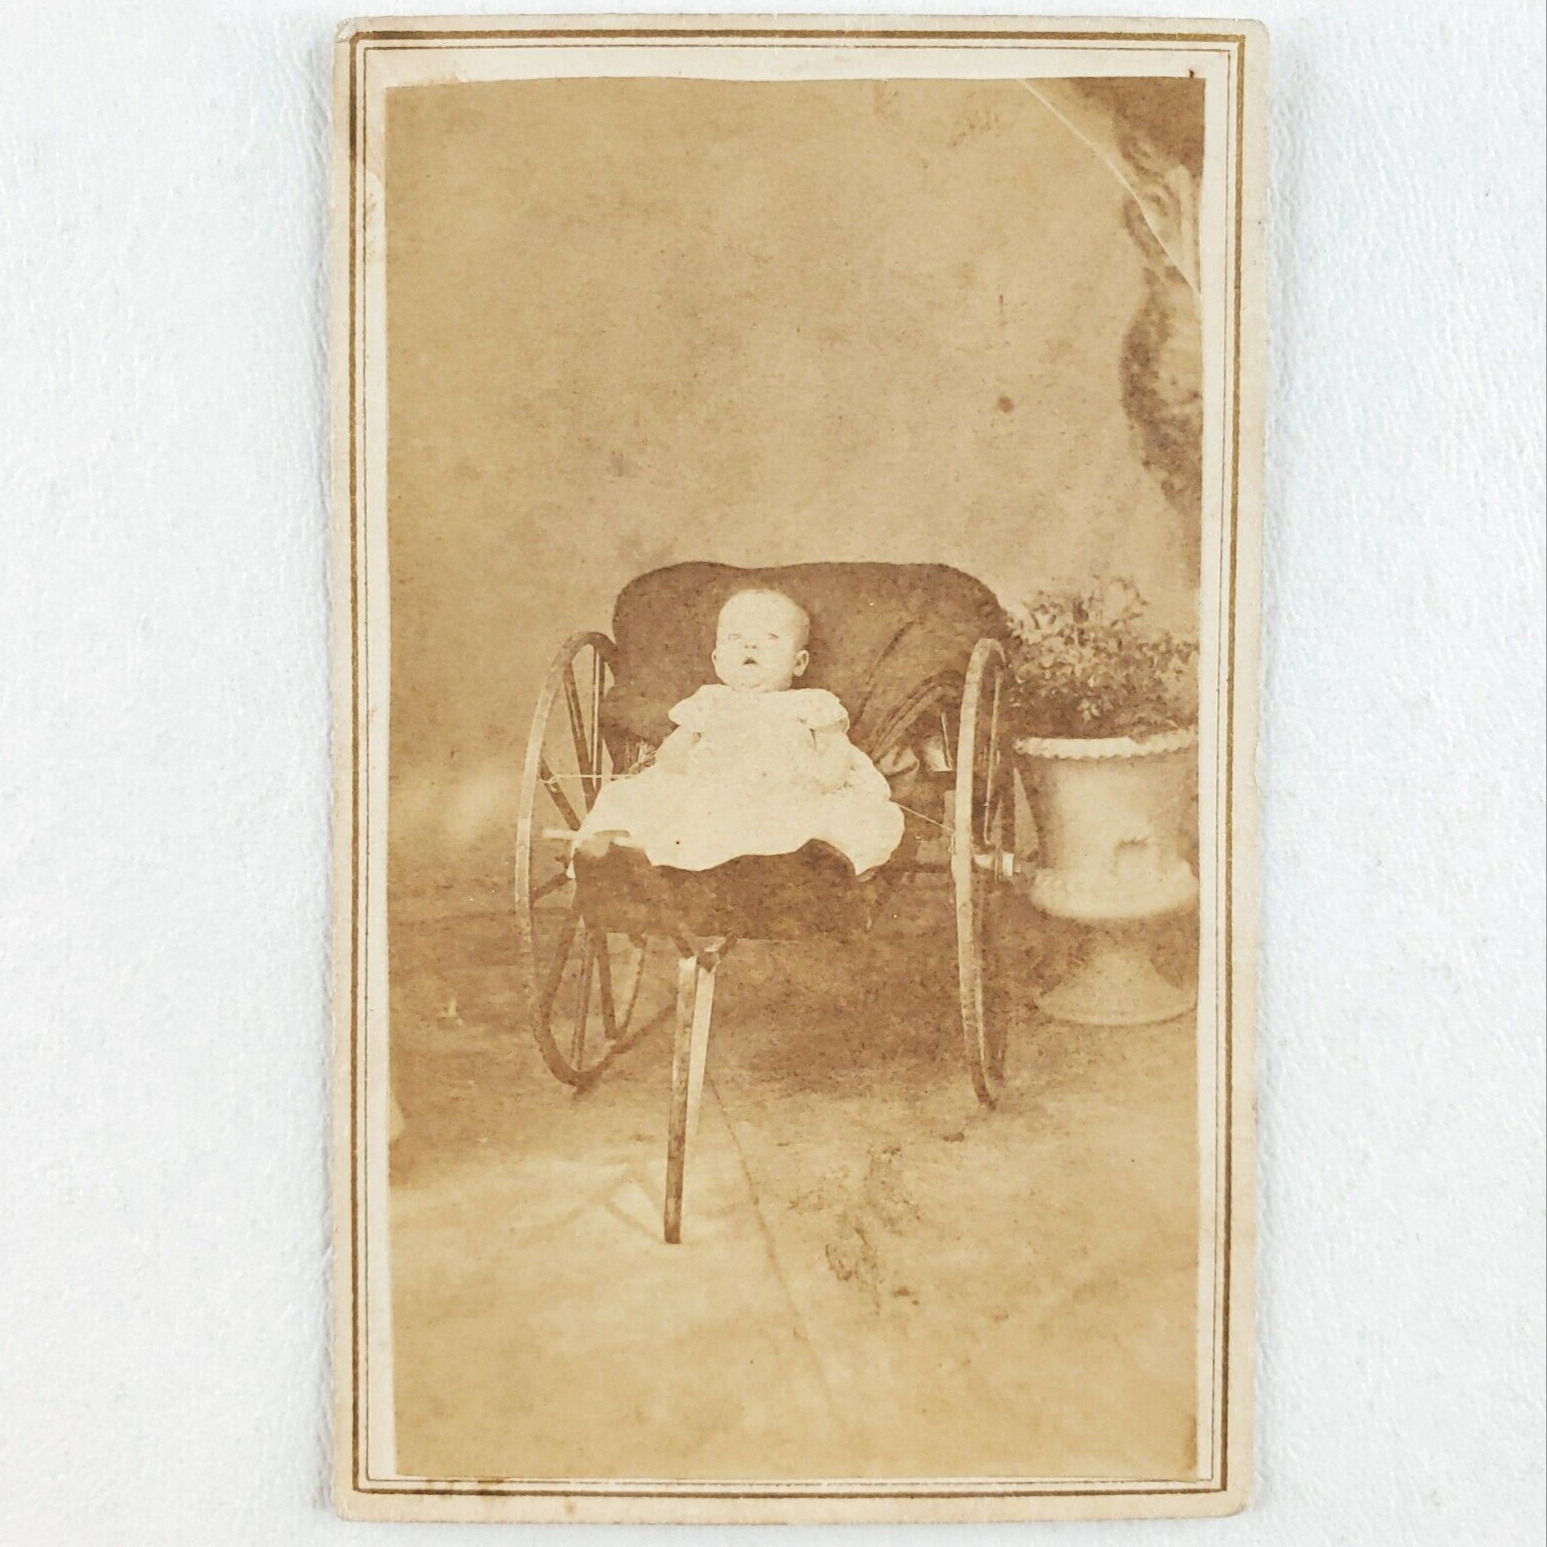 Baby Riding Trailer Pram CDV c1870 Anna Illinois Child Antique Photo Card A1649